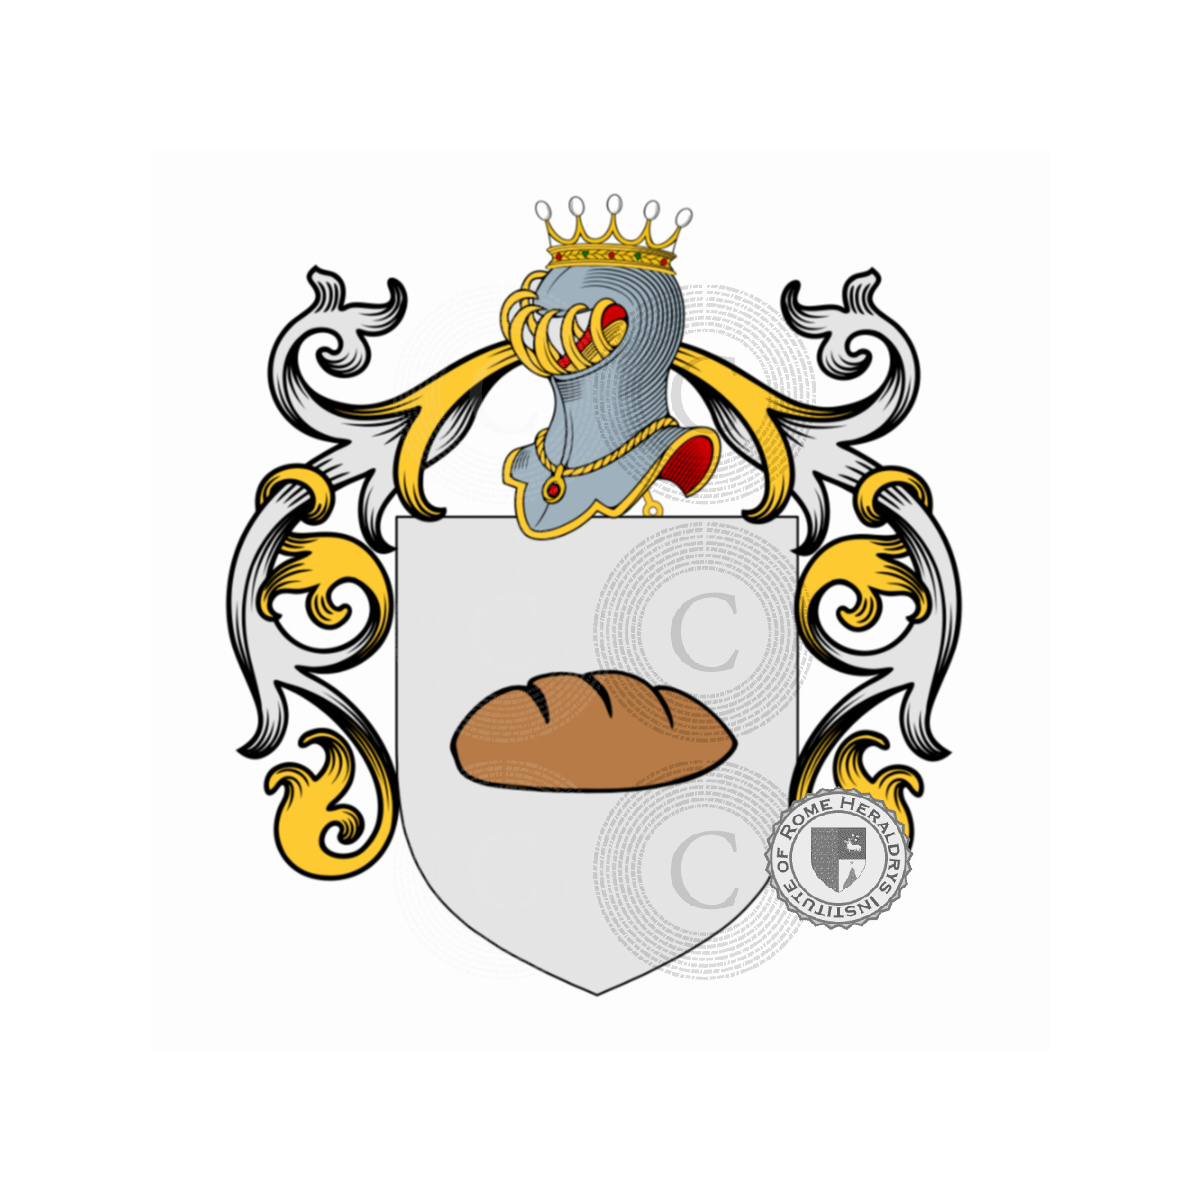 Wappen der FamiliePane, dal Pane,Panetta,Pani